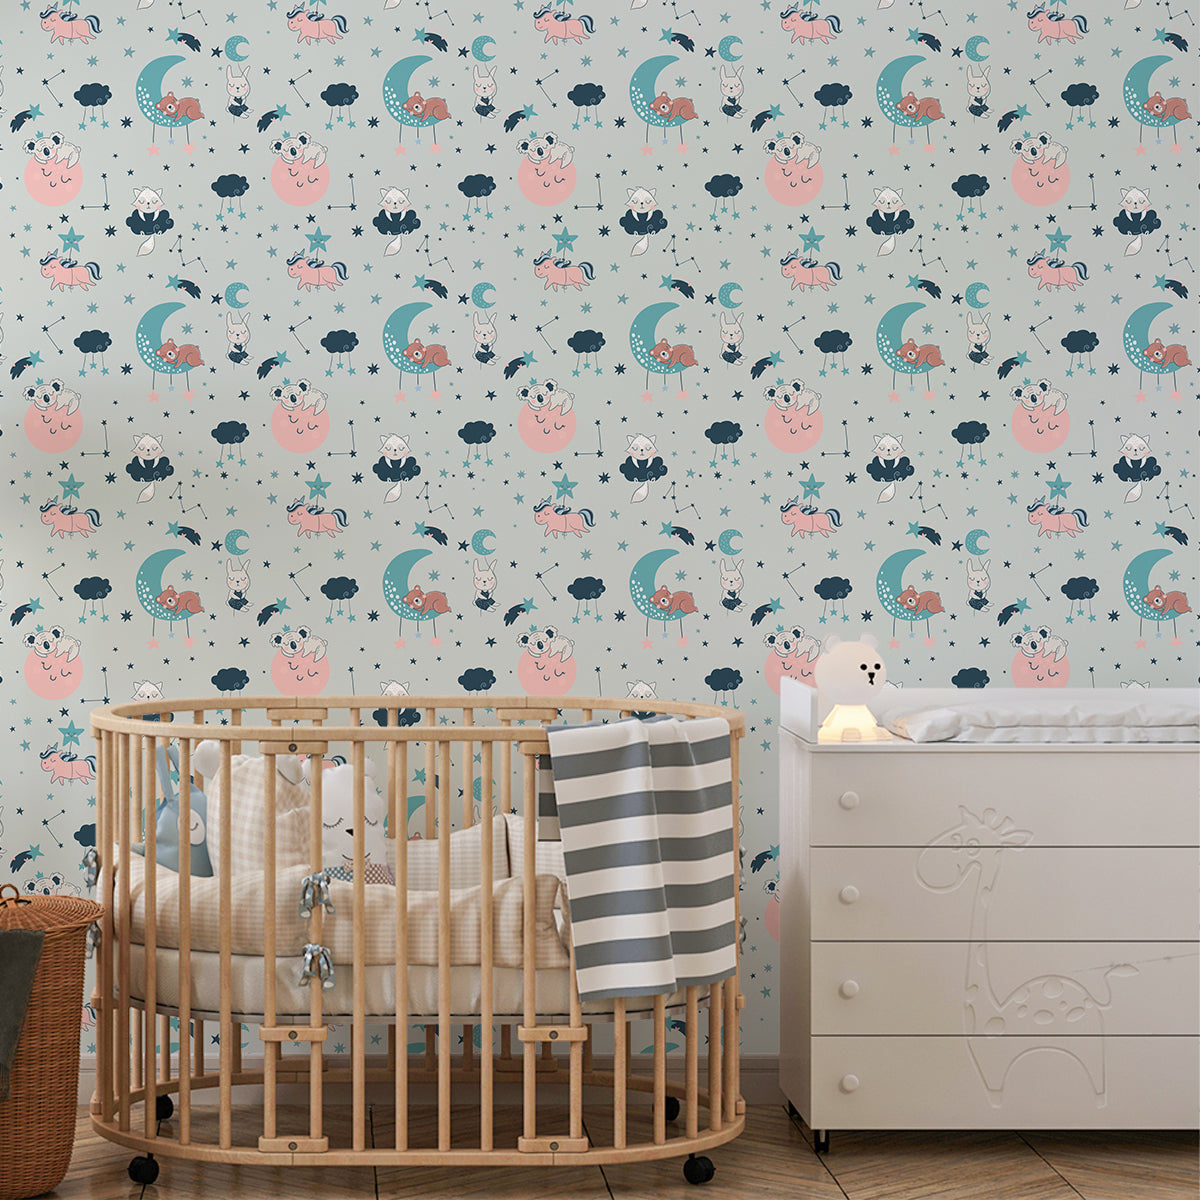 Animals Bedtime, Kids Wallpaper for Rooms, Blue